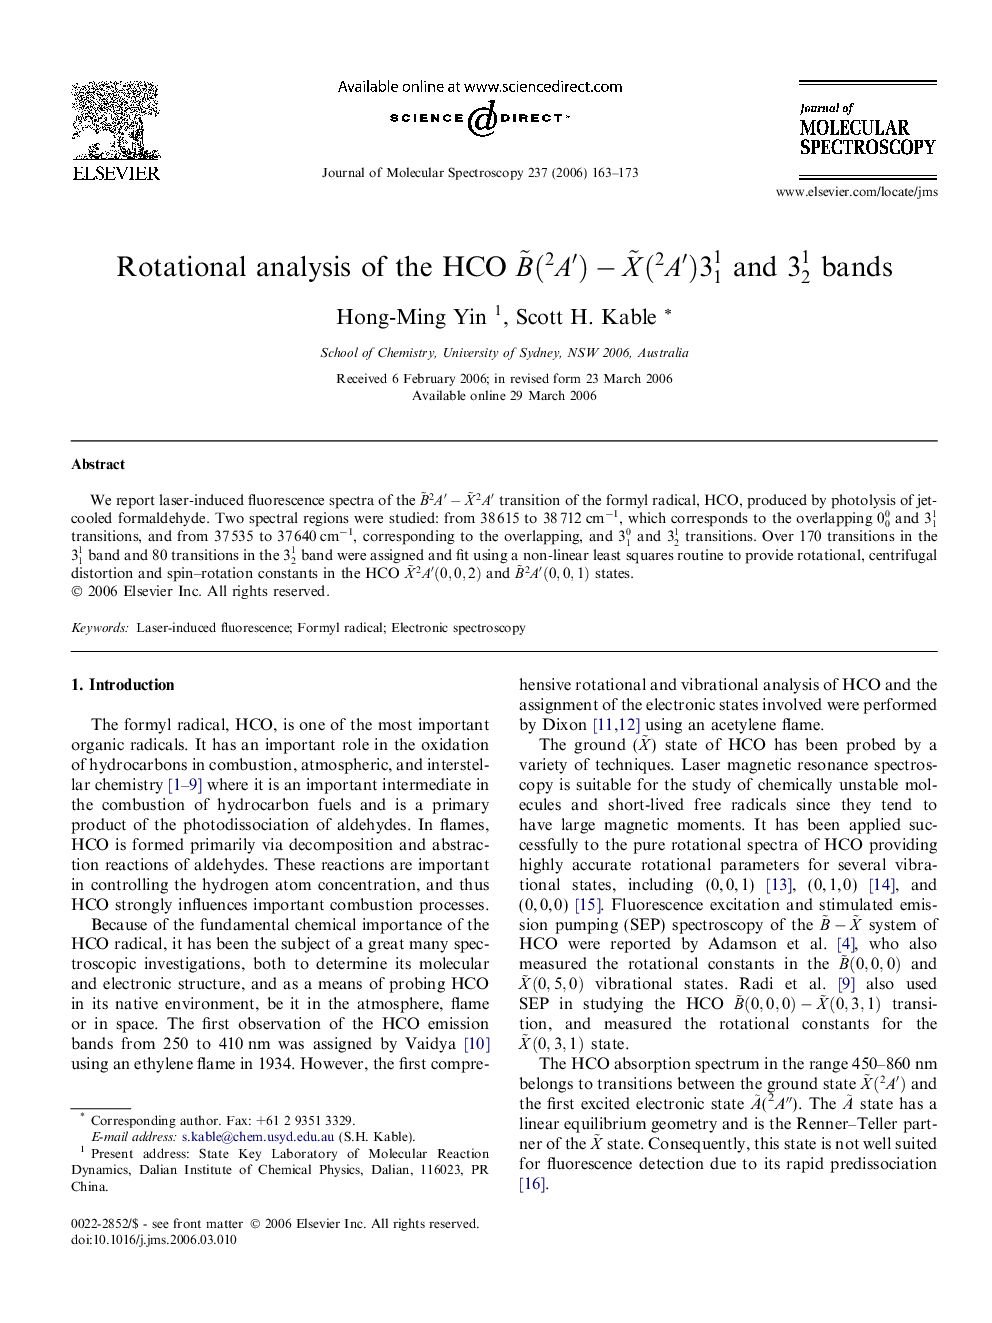 Rotational analysis of the HCO BË(2Aâ²)-XË(2Aâ²)311 and 321 bands